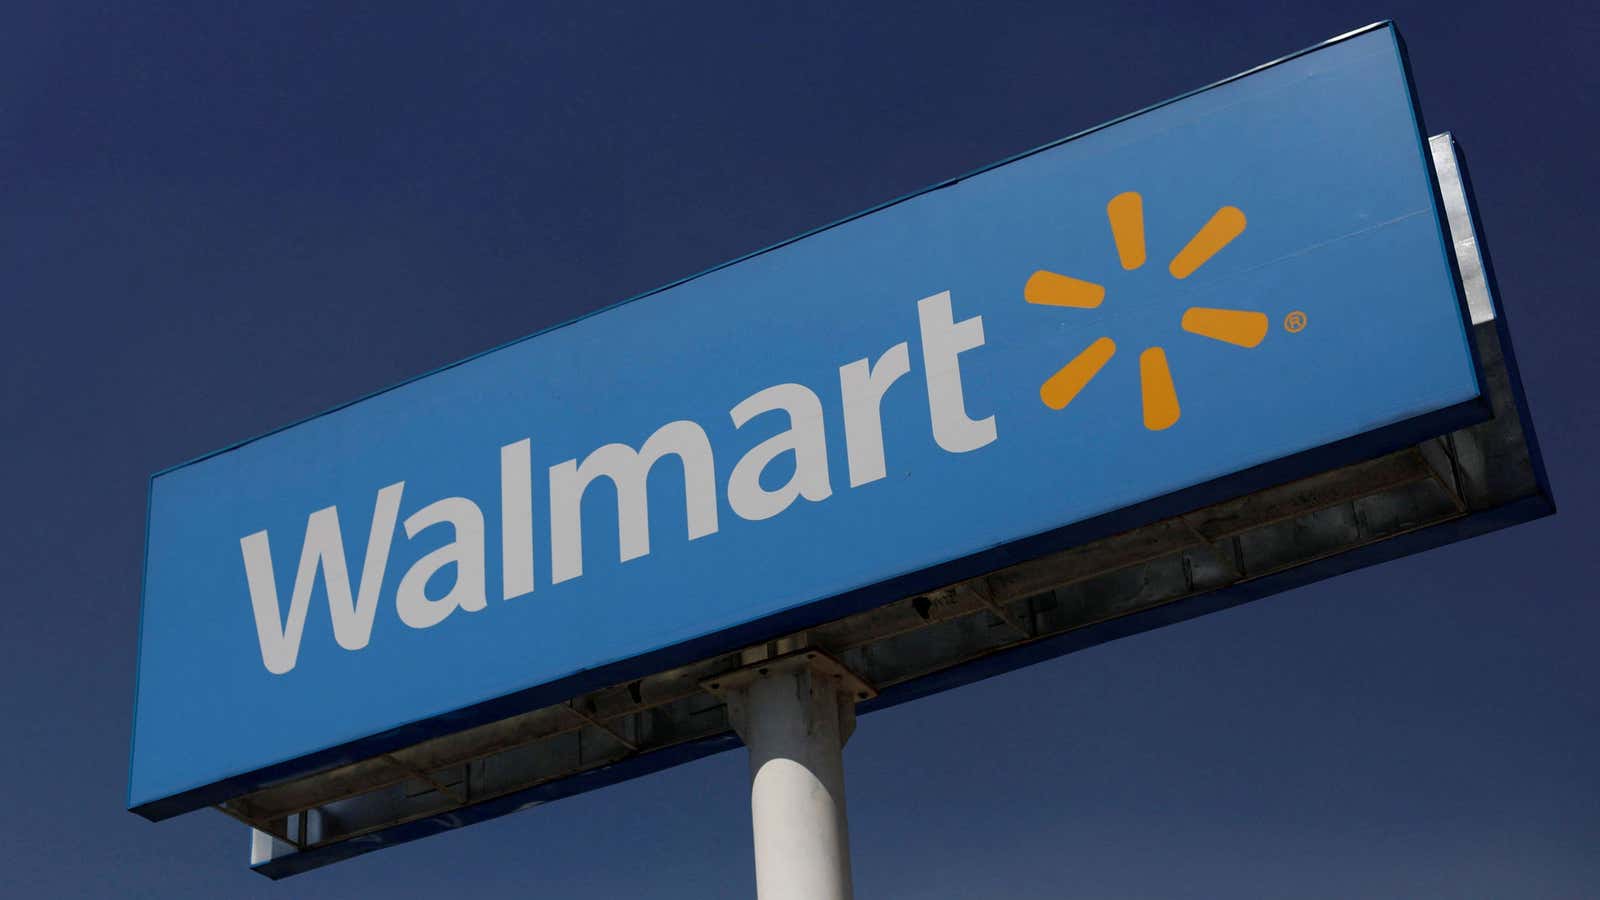 A billboard displays the Walmart logo.